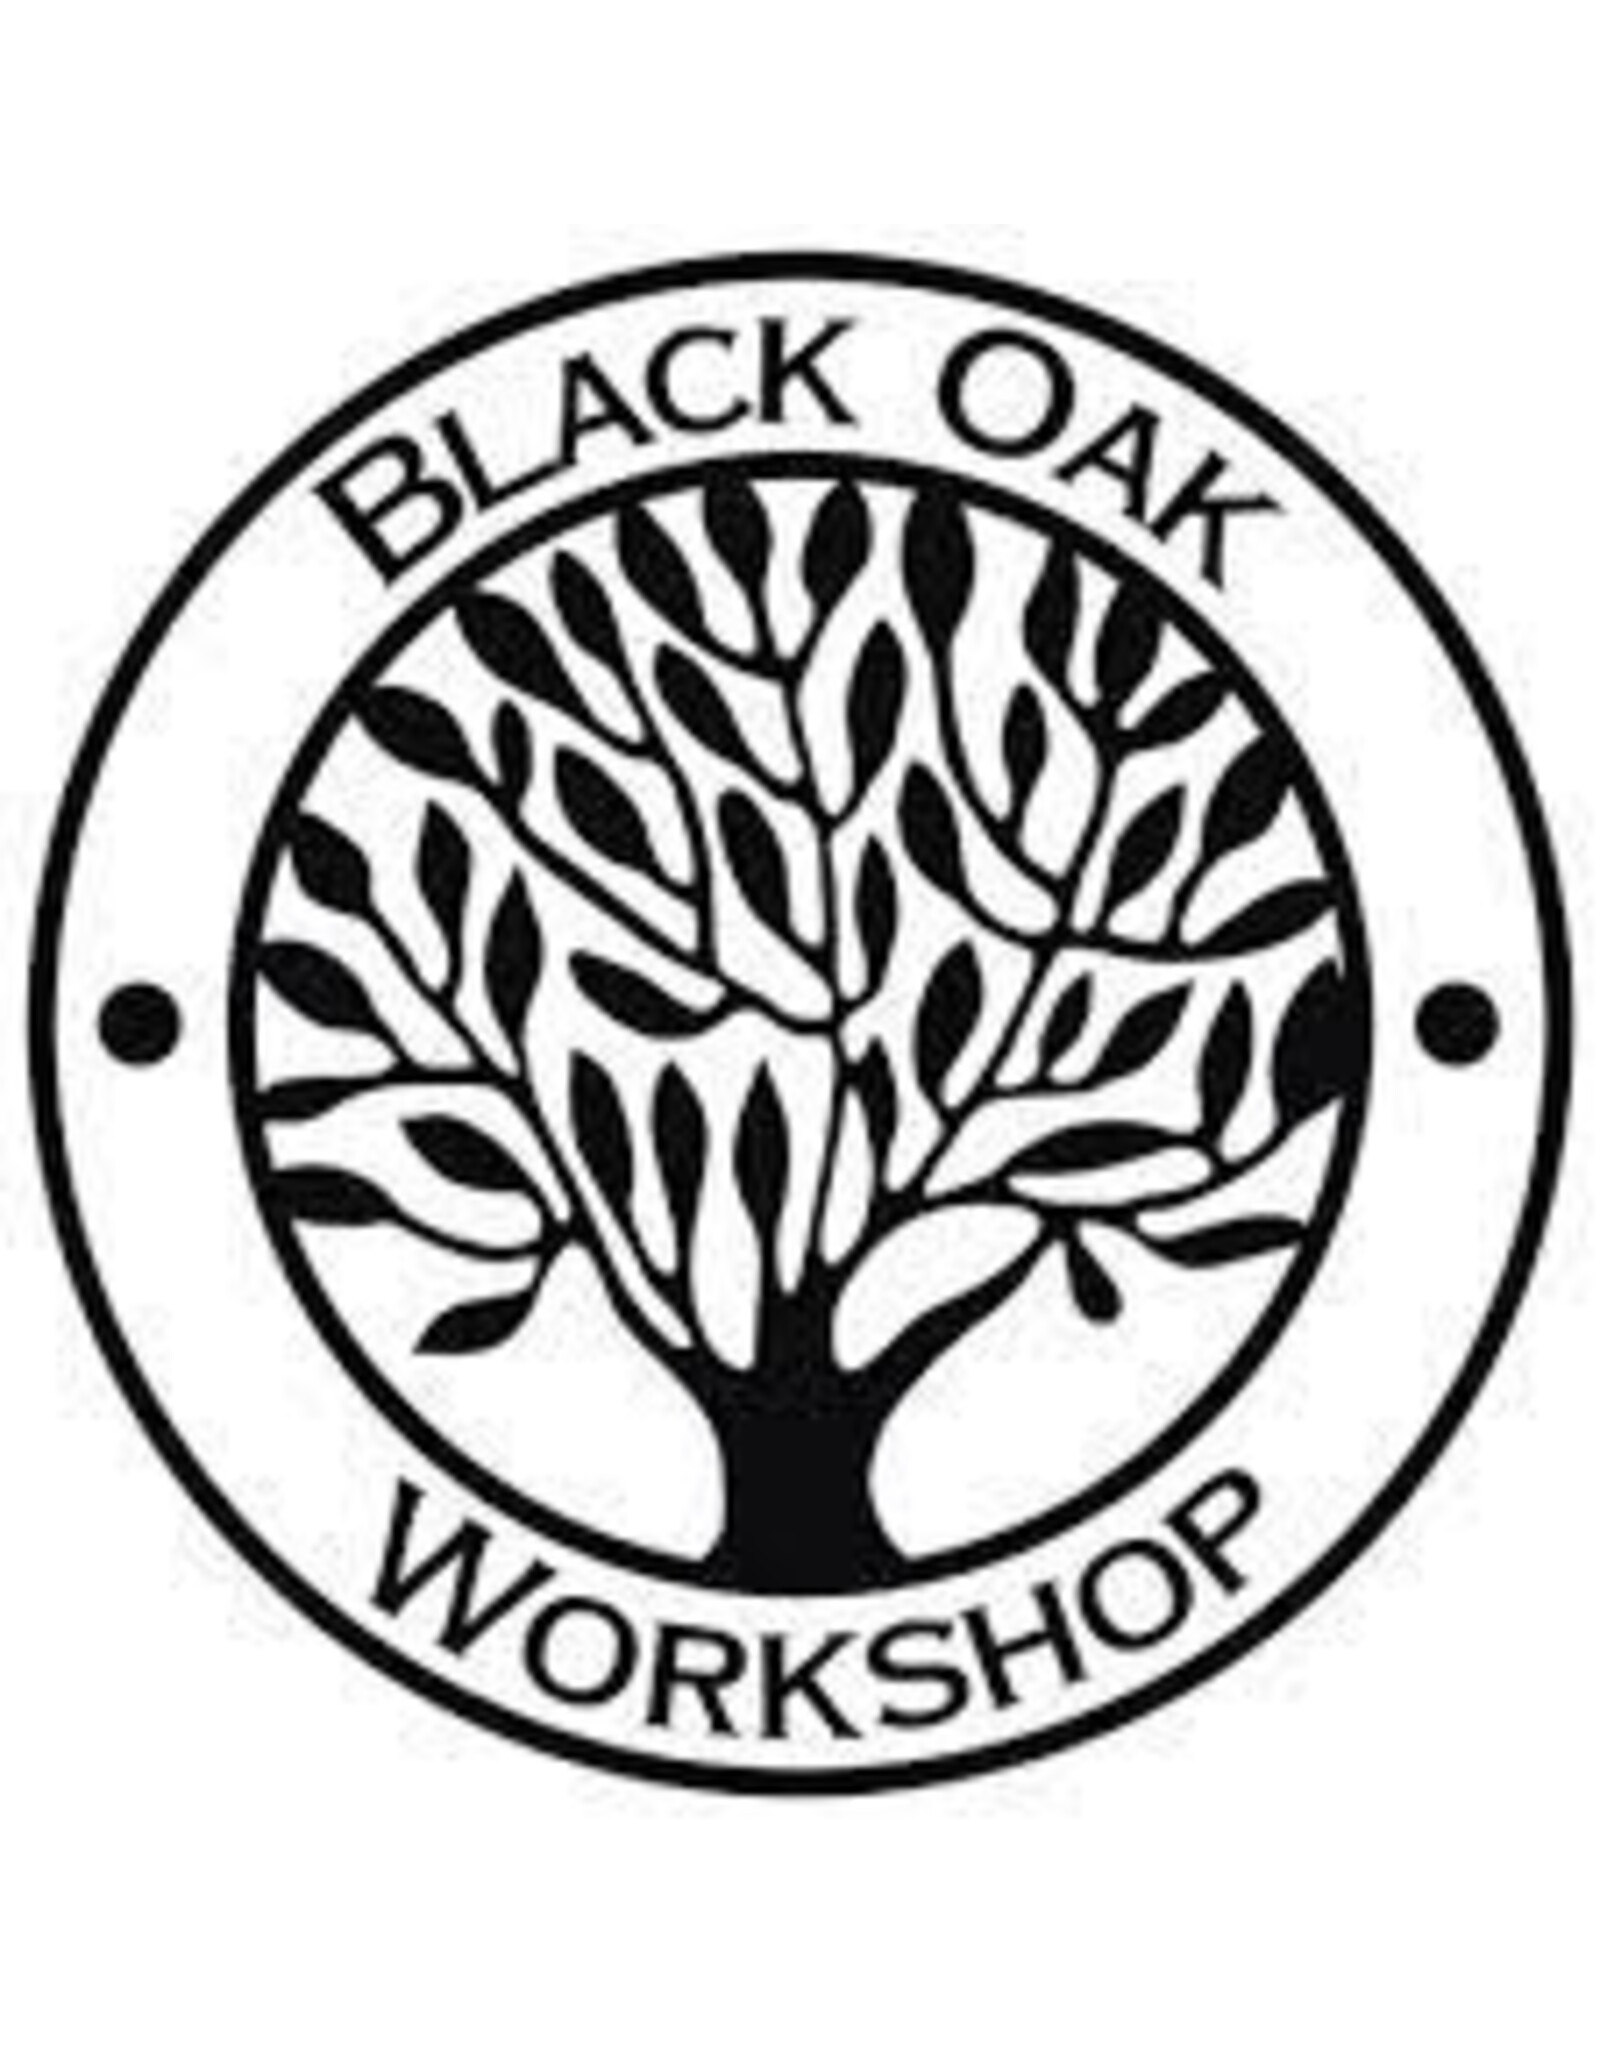 Black Oak Workshop Dice Bag: Insert Dice